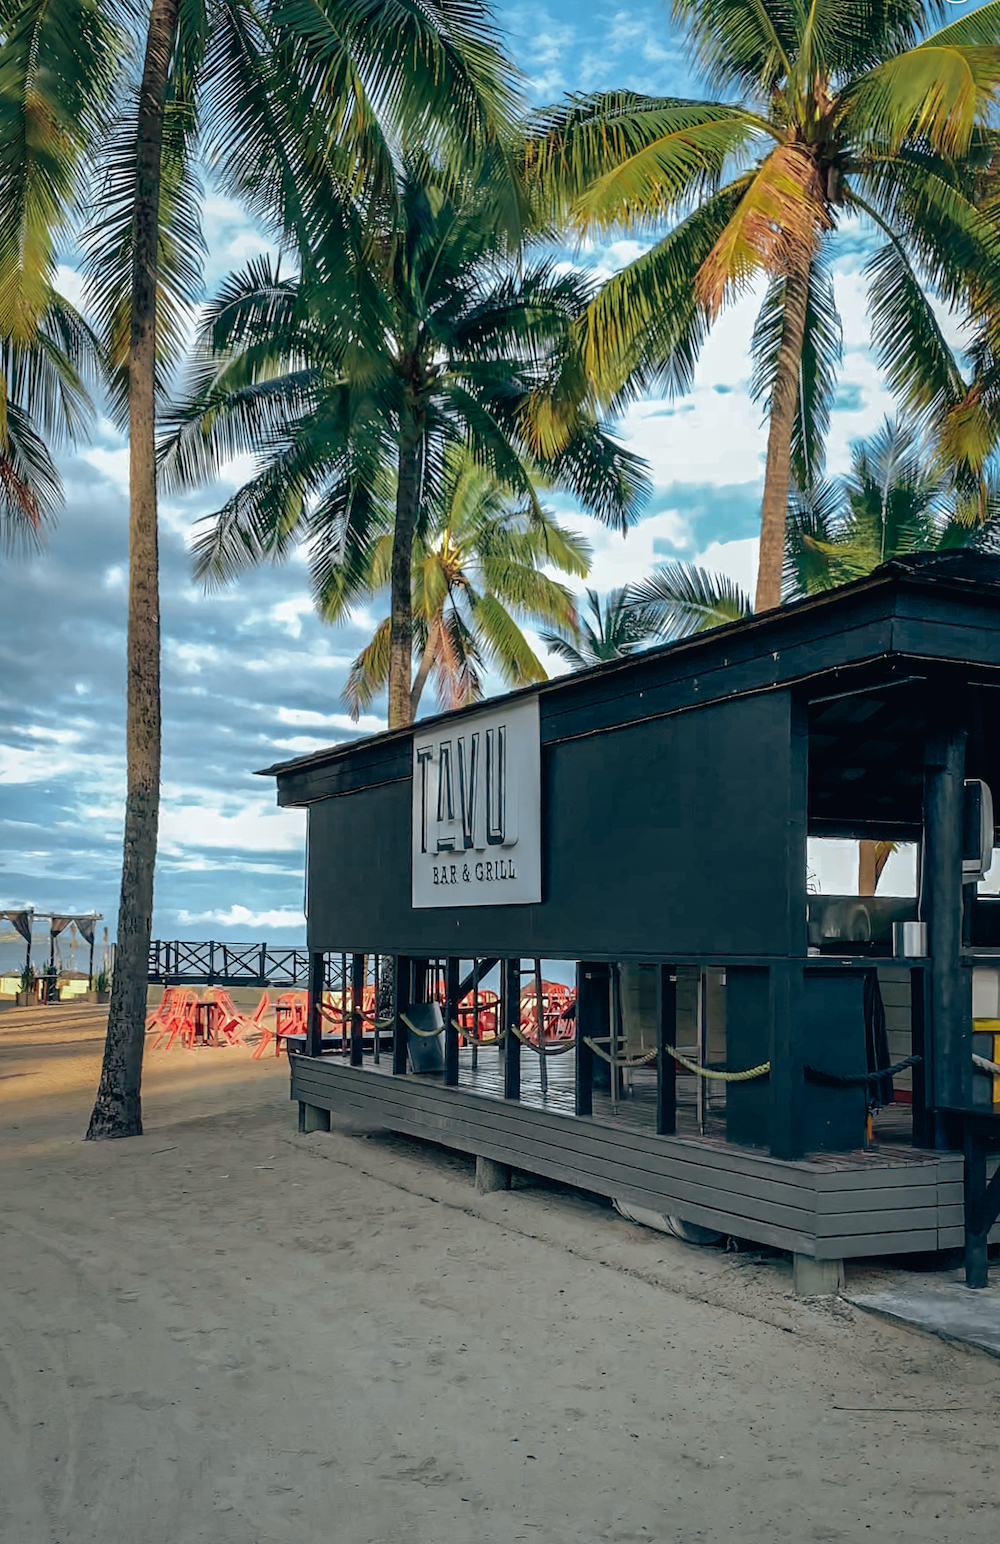 Tavu Bar and Grill at DoubleTree by Hilton Fiji Resort - Viti Levu, Fiji